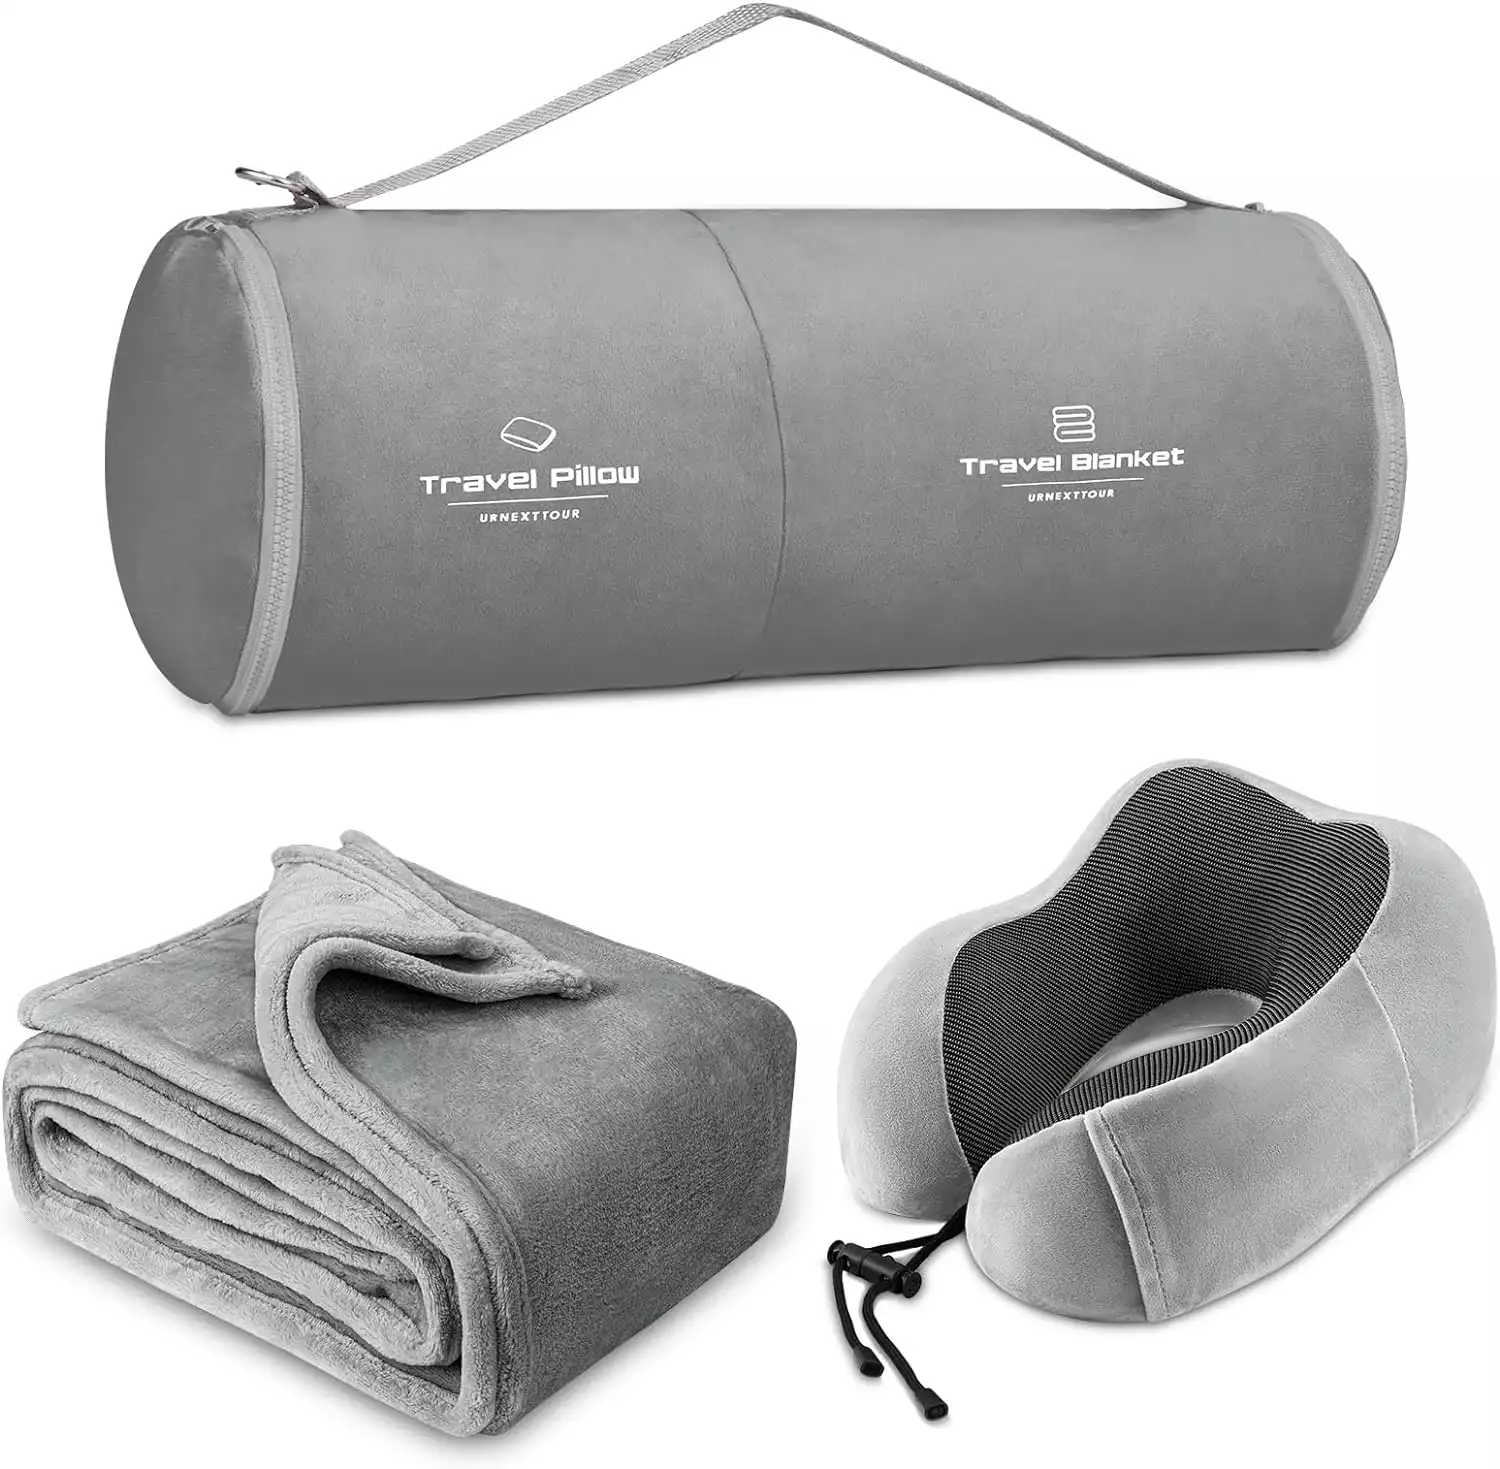 UrNextTour Neck Pillow and Blanket Set